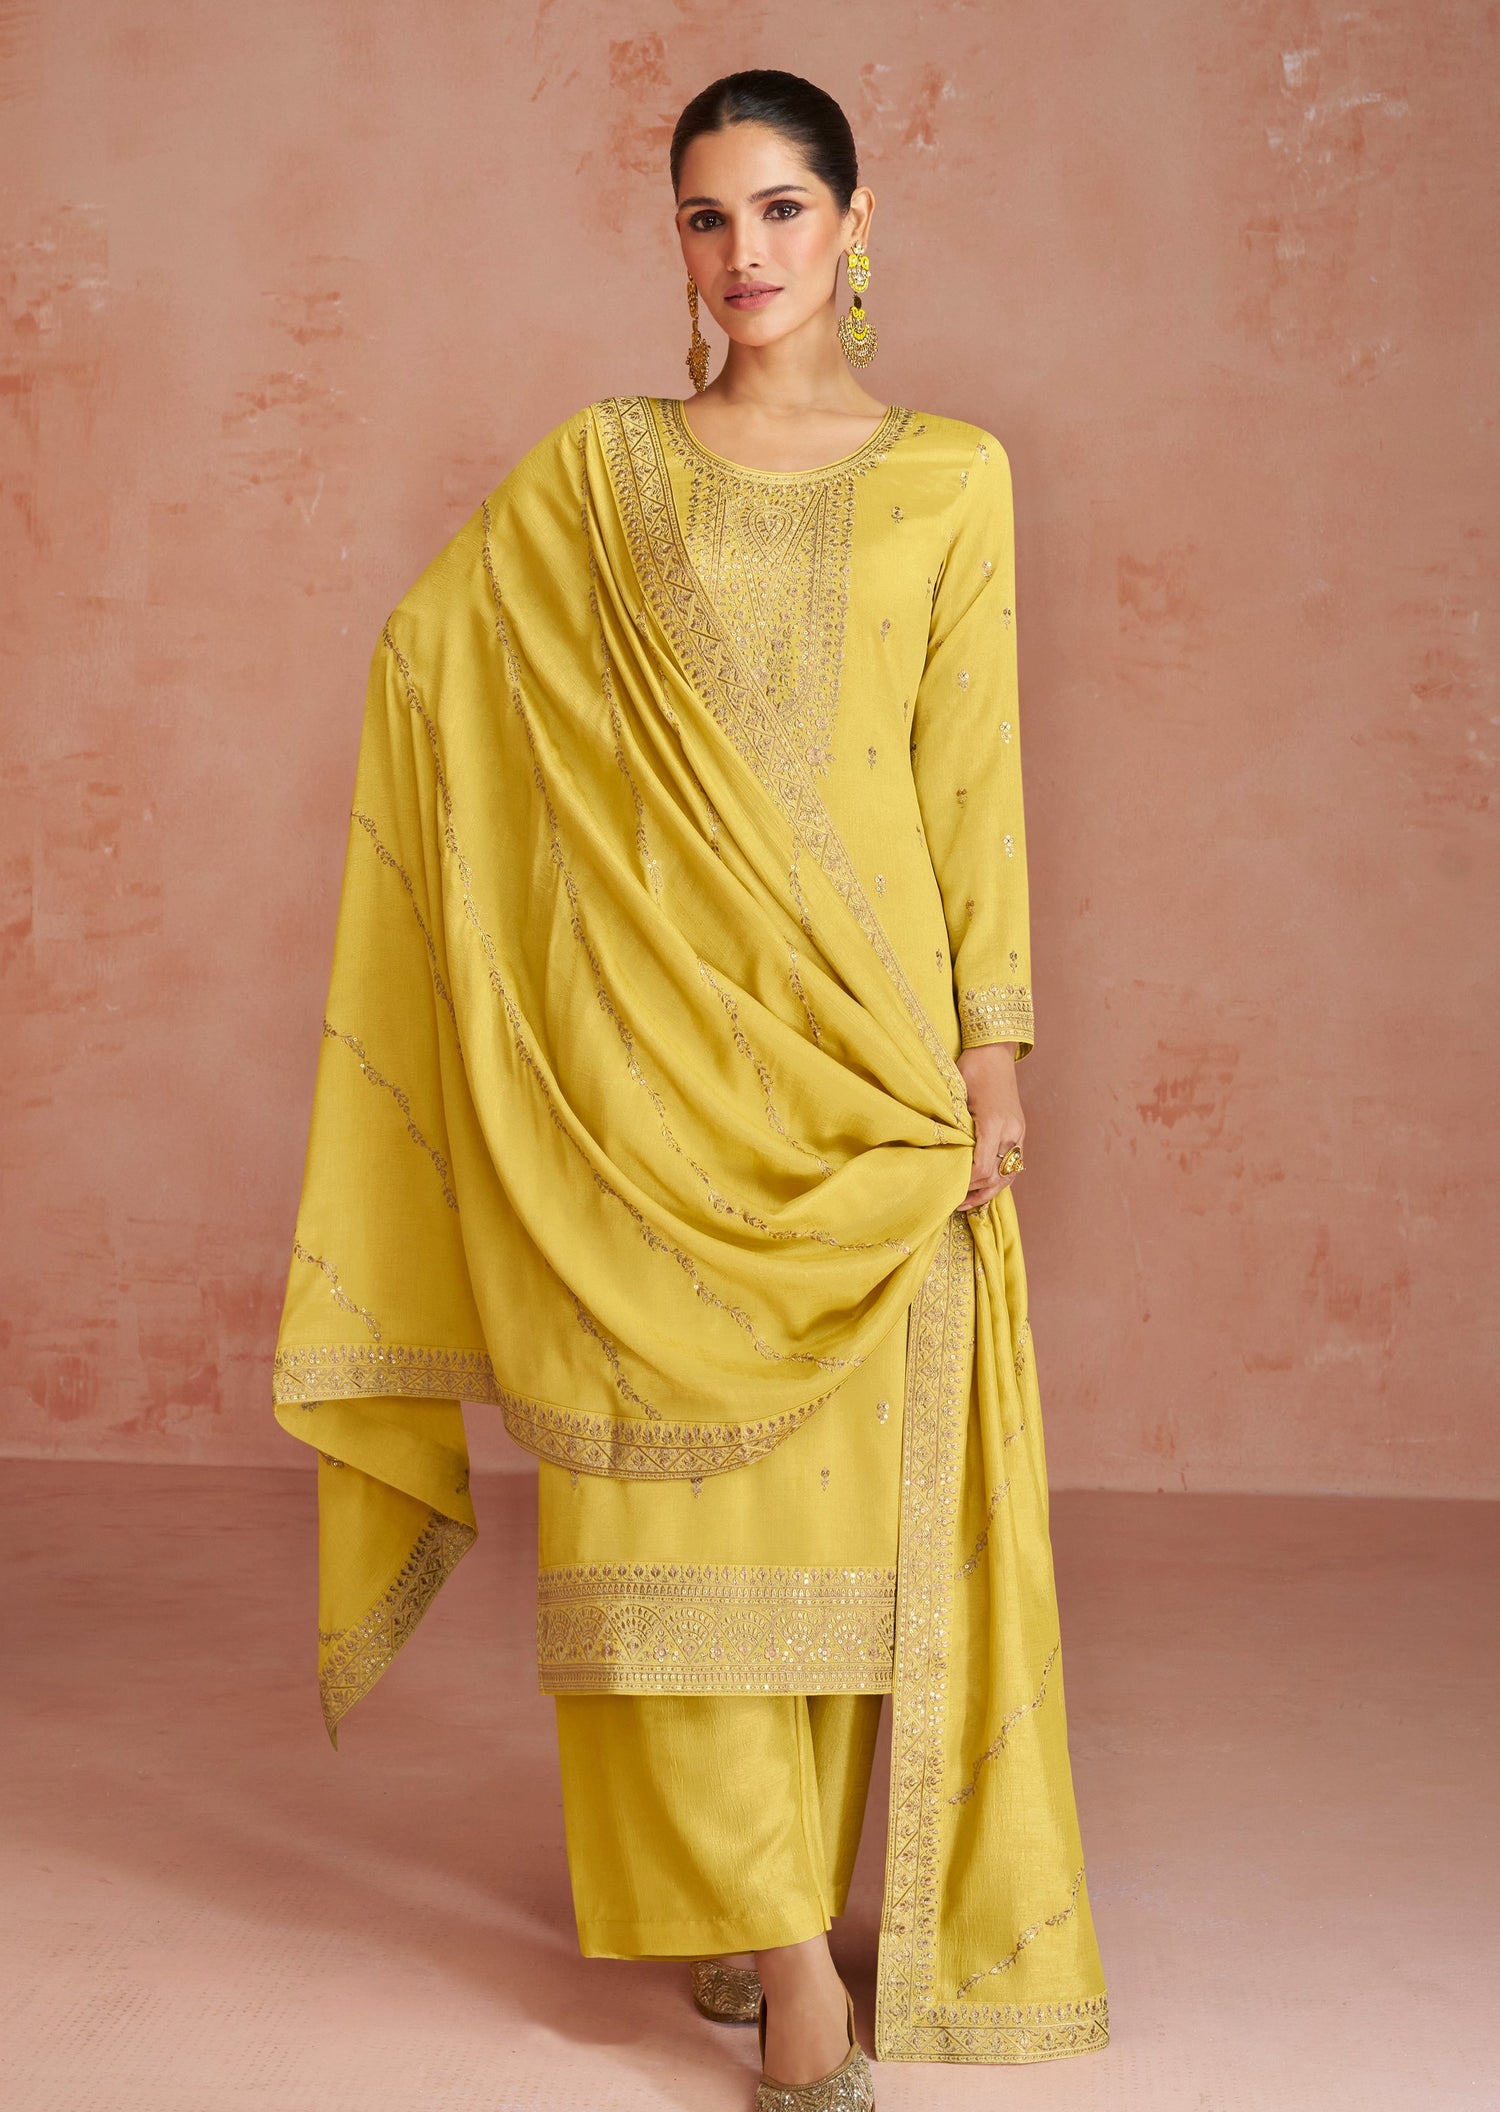 PERSIAN GREEN CHANDERI SILK SALWAR KAMEEZ SUIT DRESS MATERIAL w EMBR LADIES  DEN | eBay